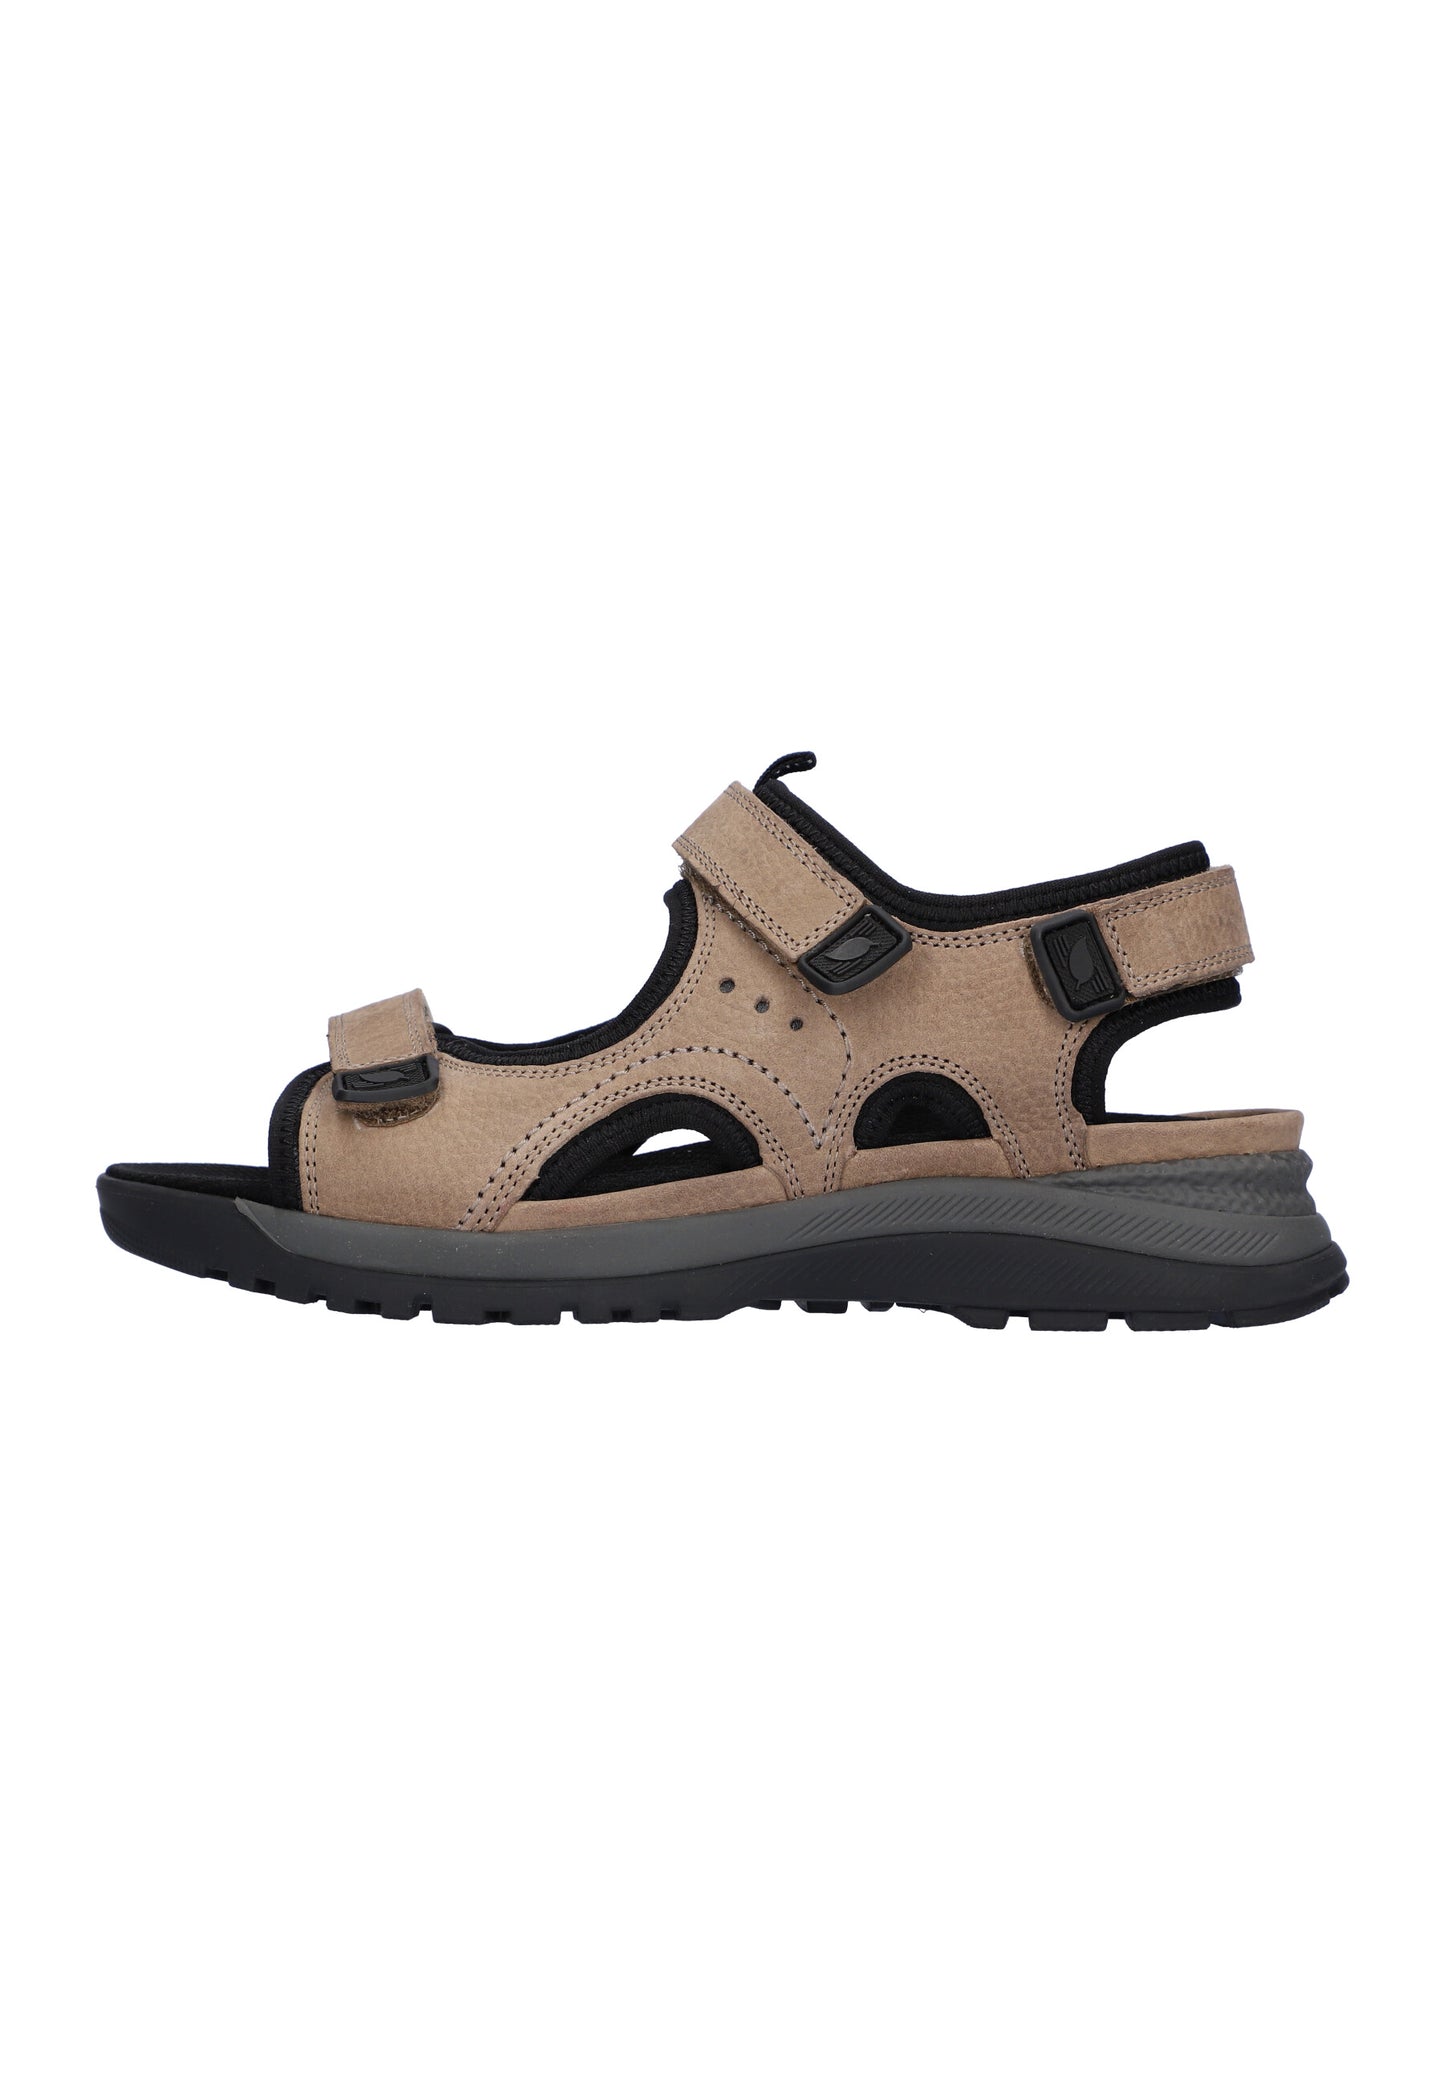 Waldlaufer 769002 200 090 Sand & Black Velcro Sandals